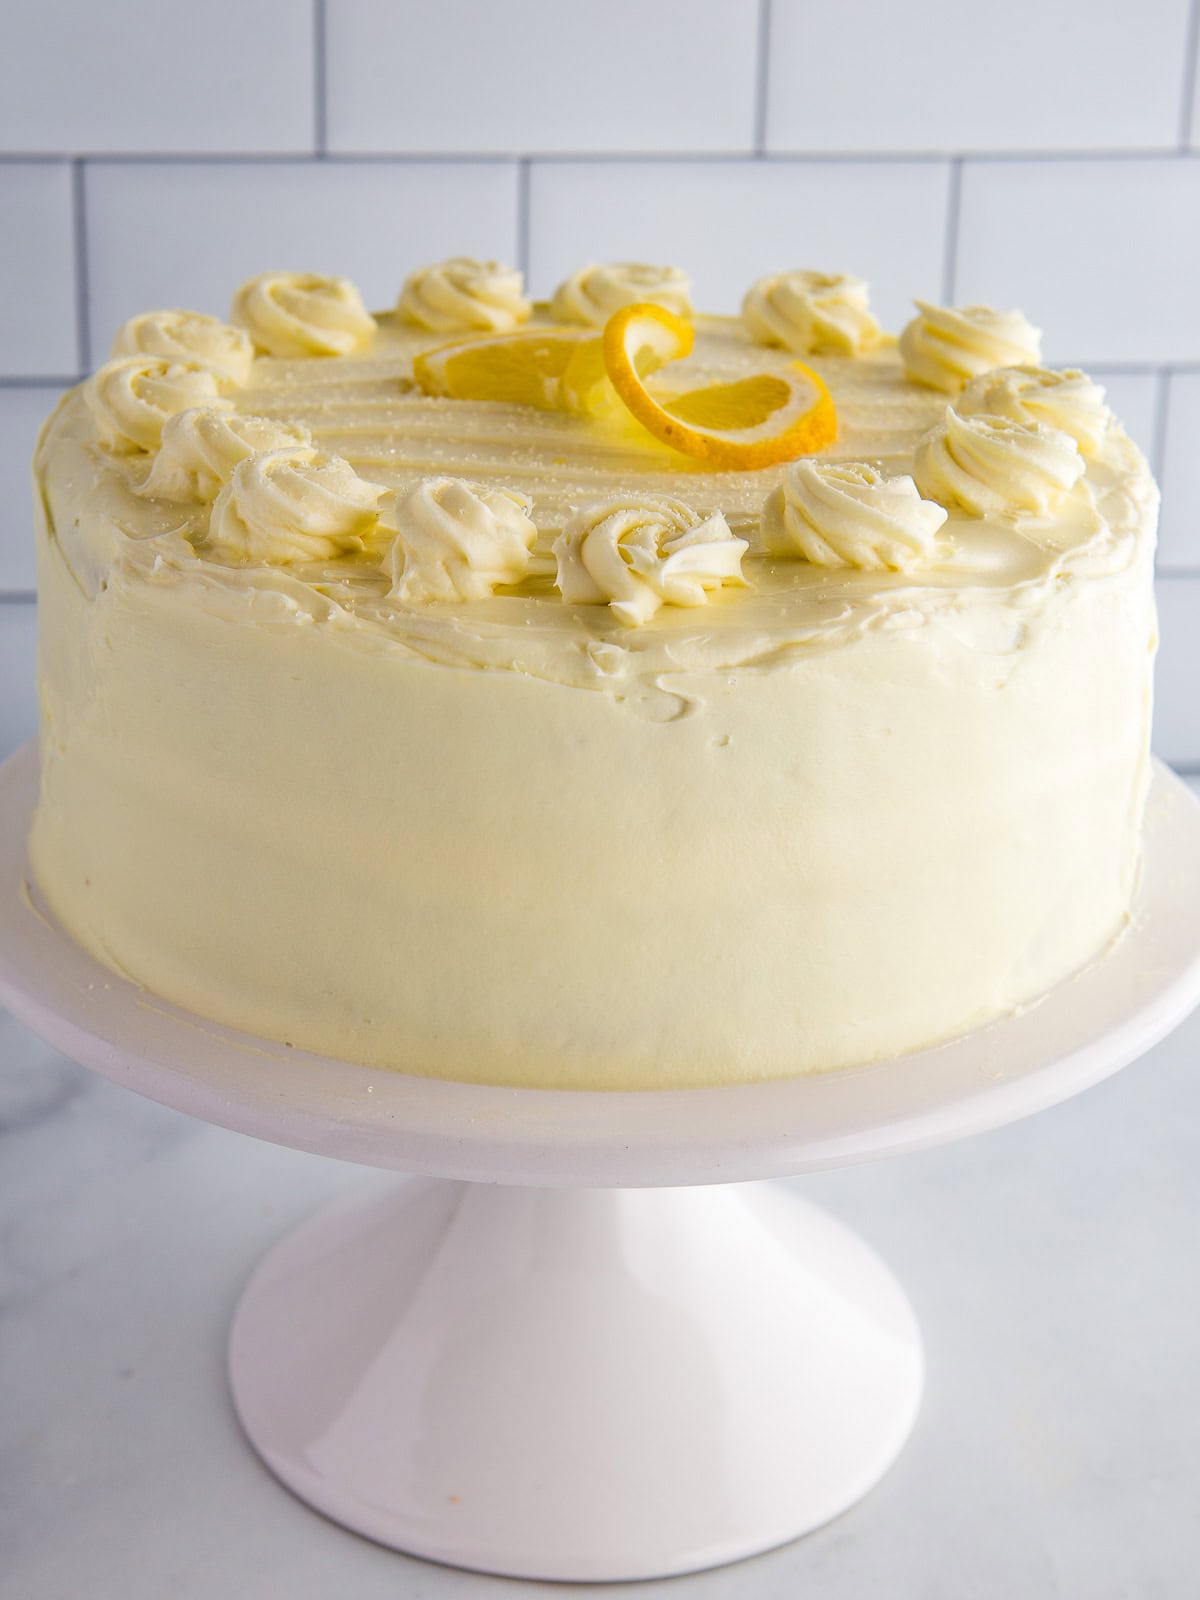 A gluten-free lemon cake on a cake stand.